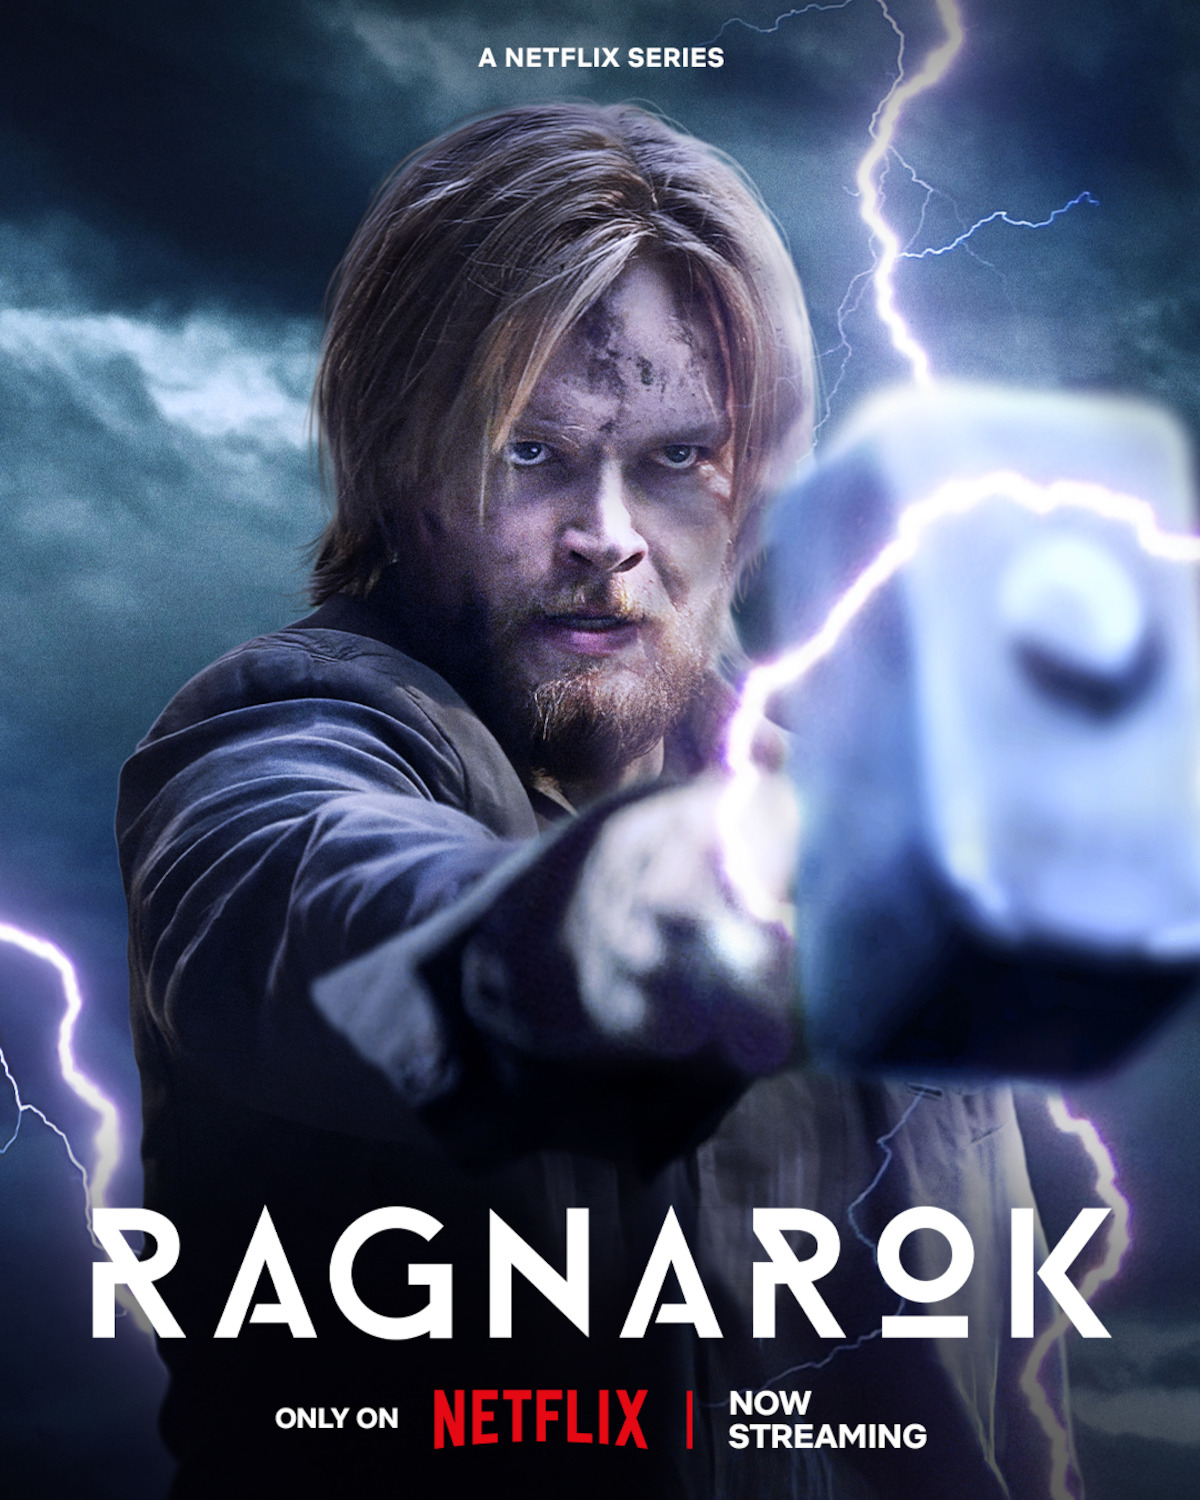 Ragnarōk